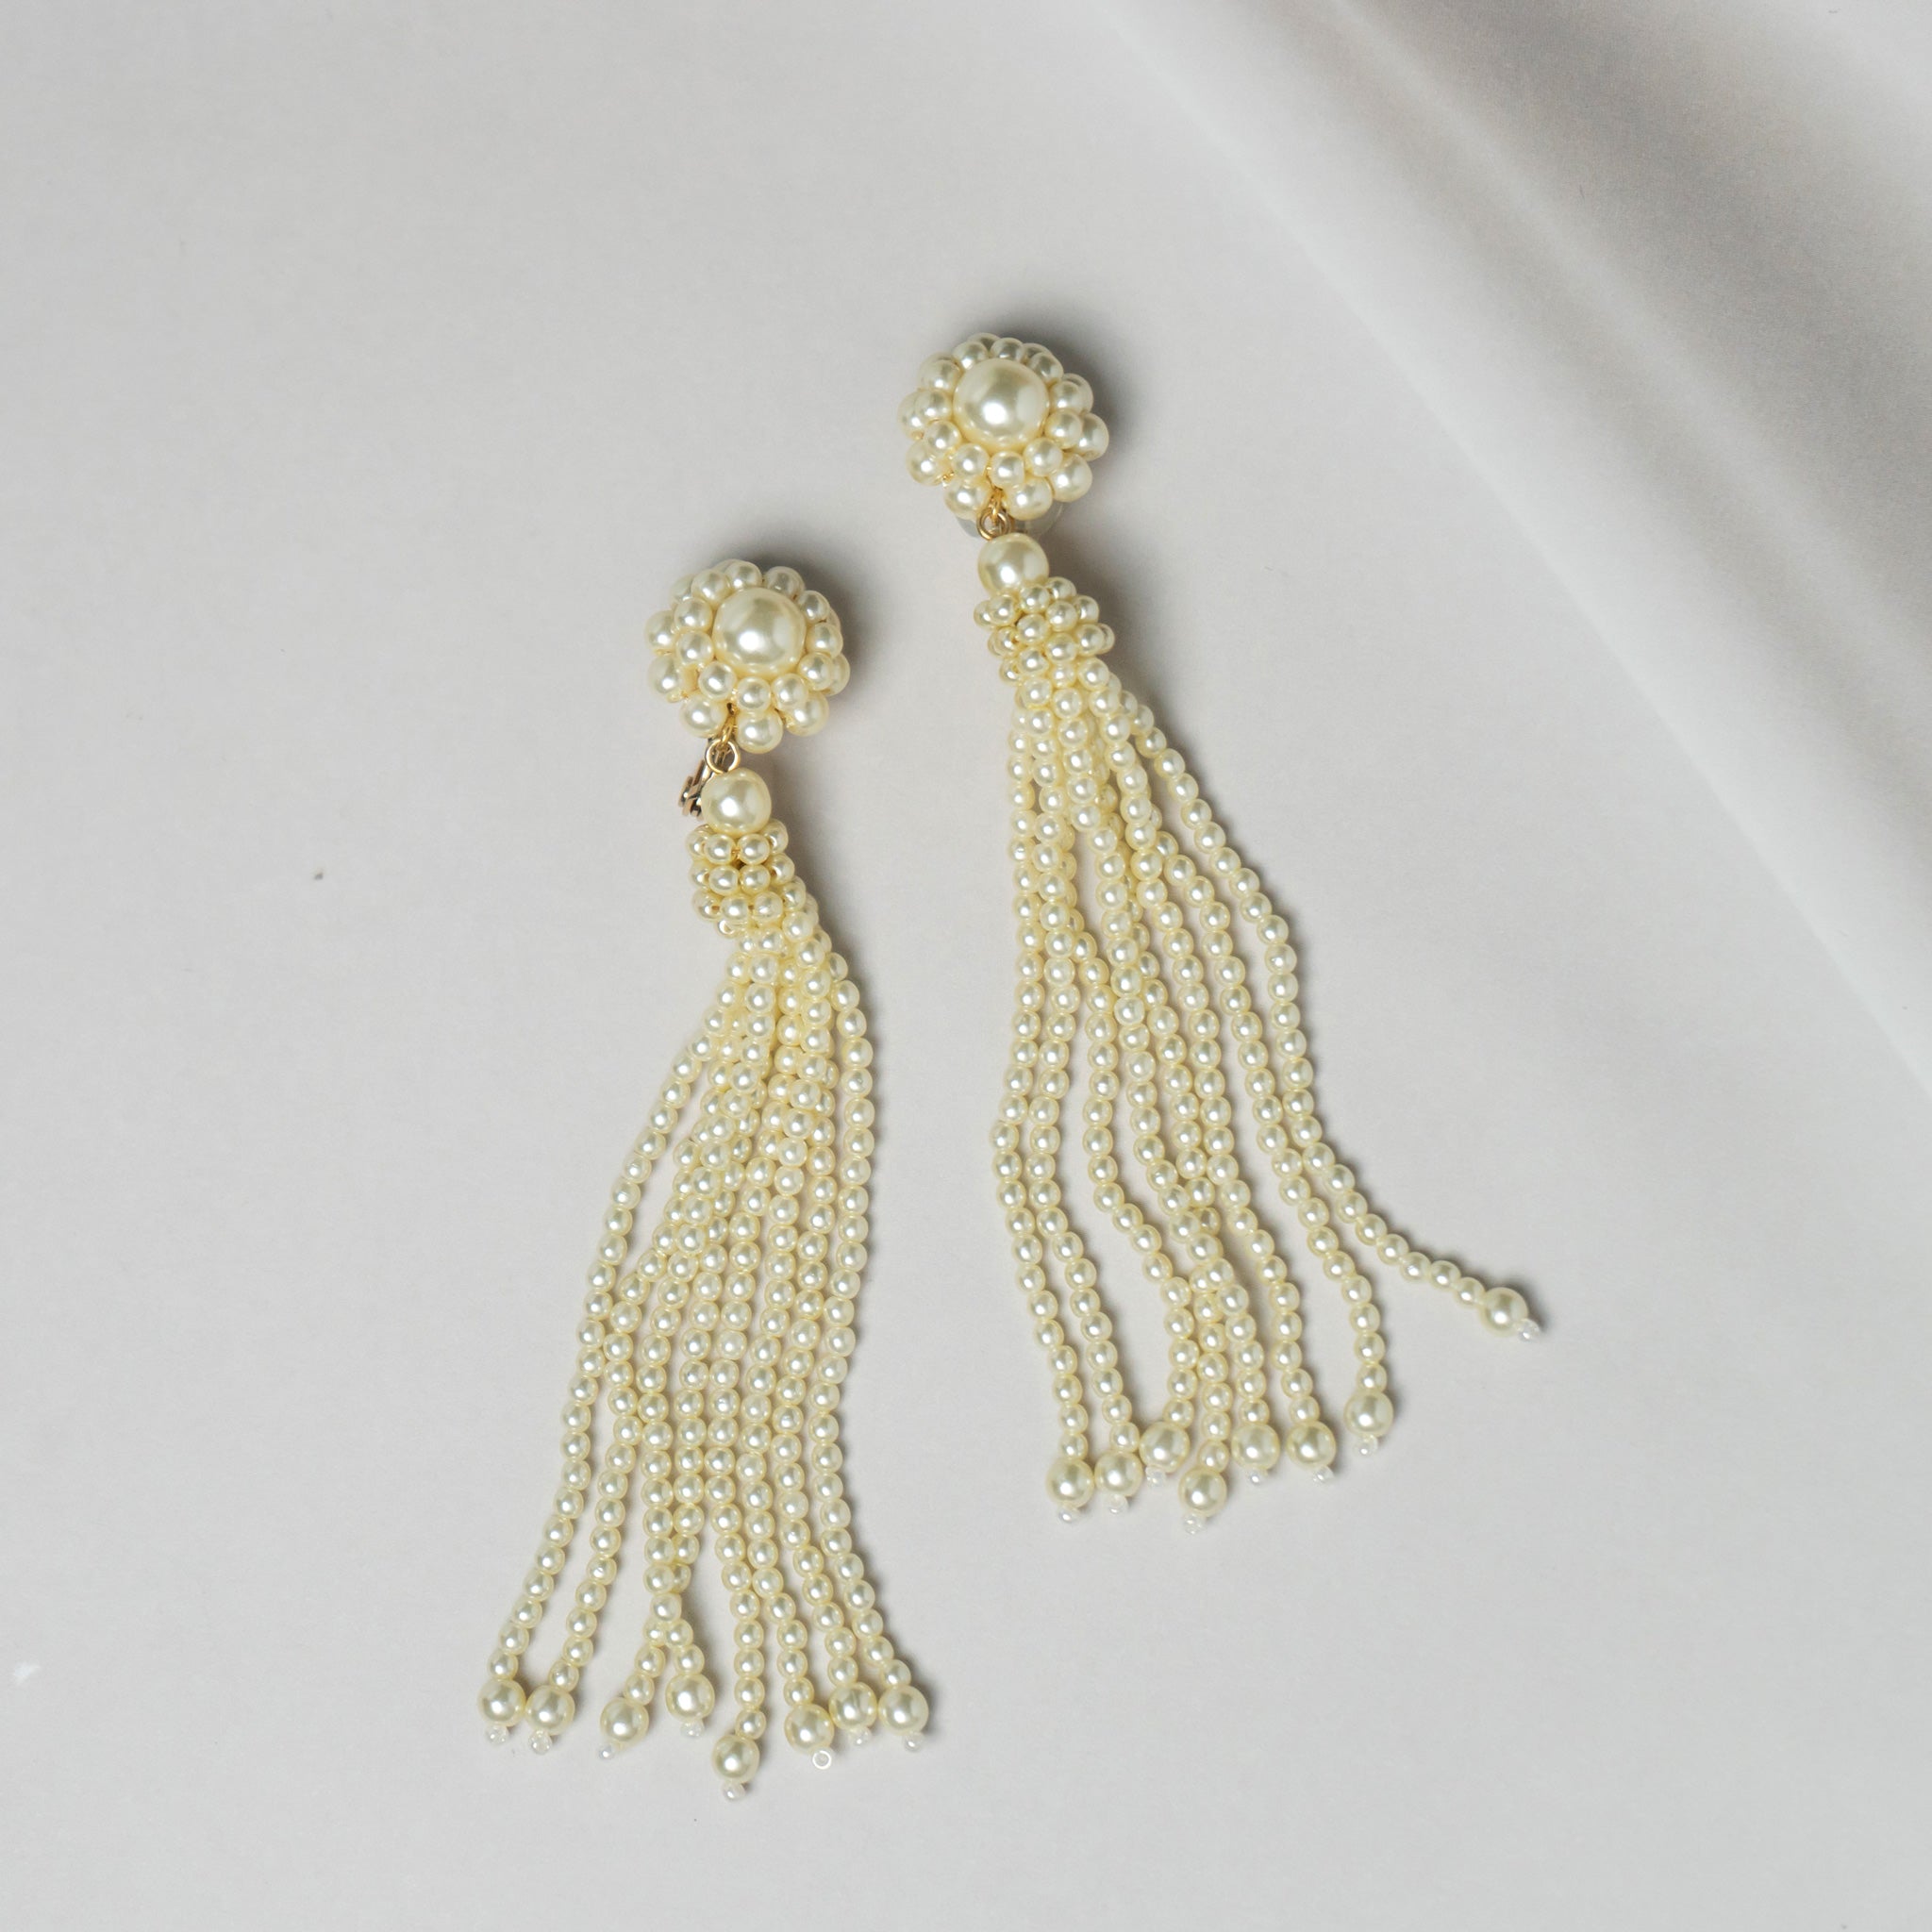 Long earrings for pearl flowers and tassel